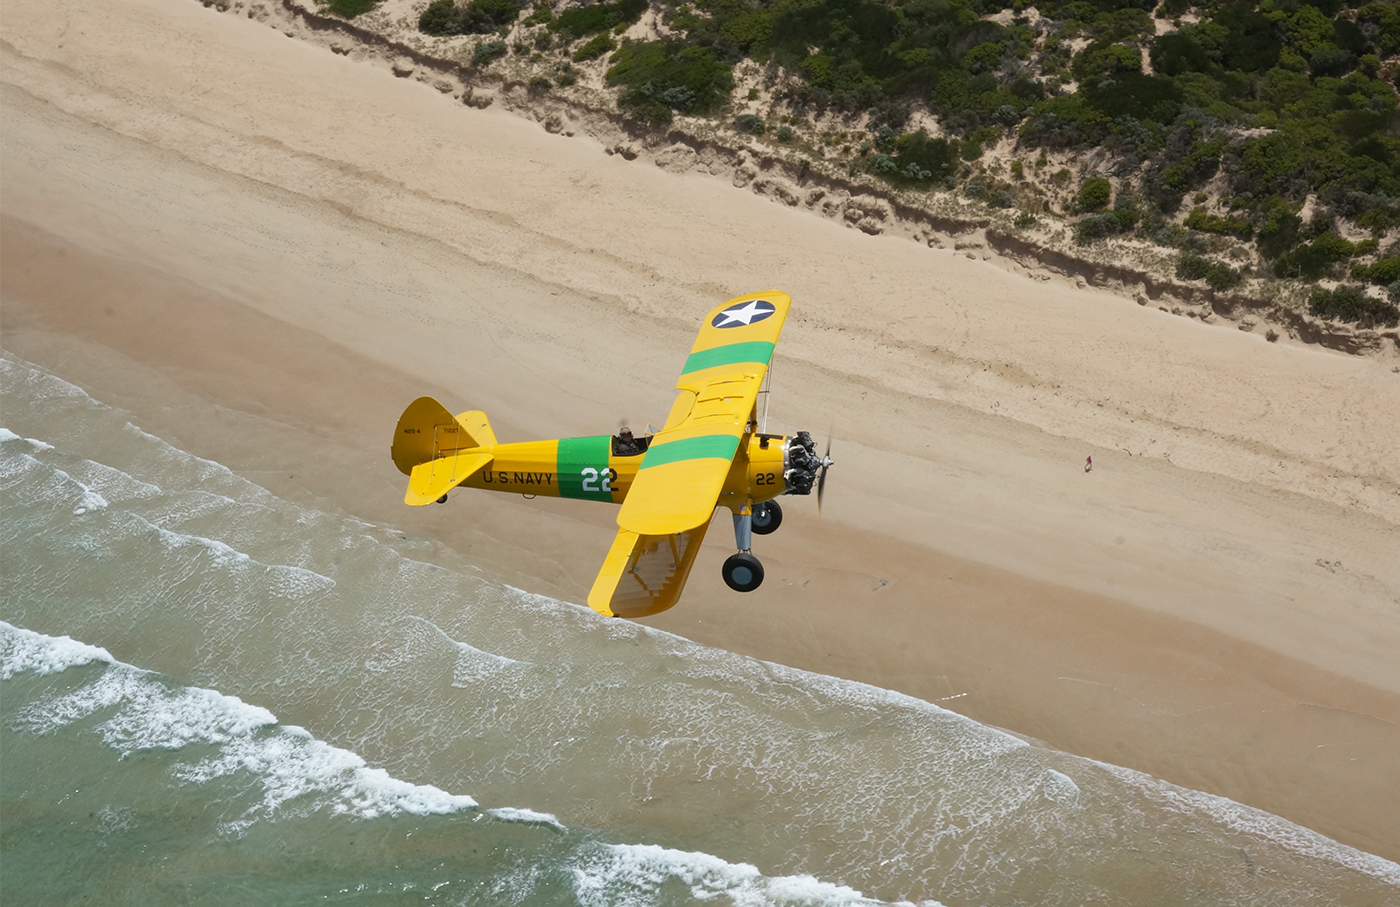 Biplane flying over Torquay's beautiful beaches